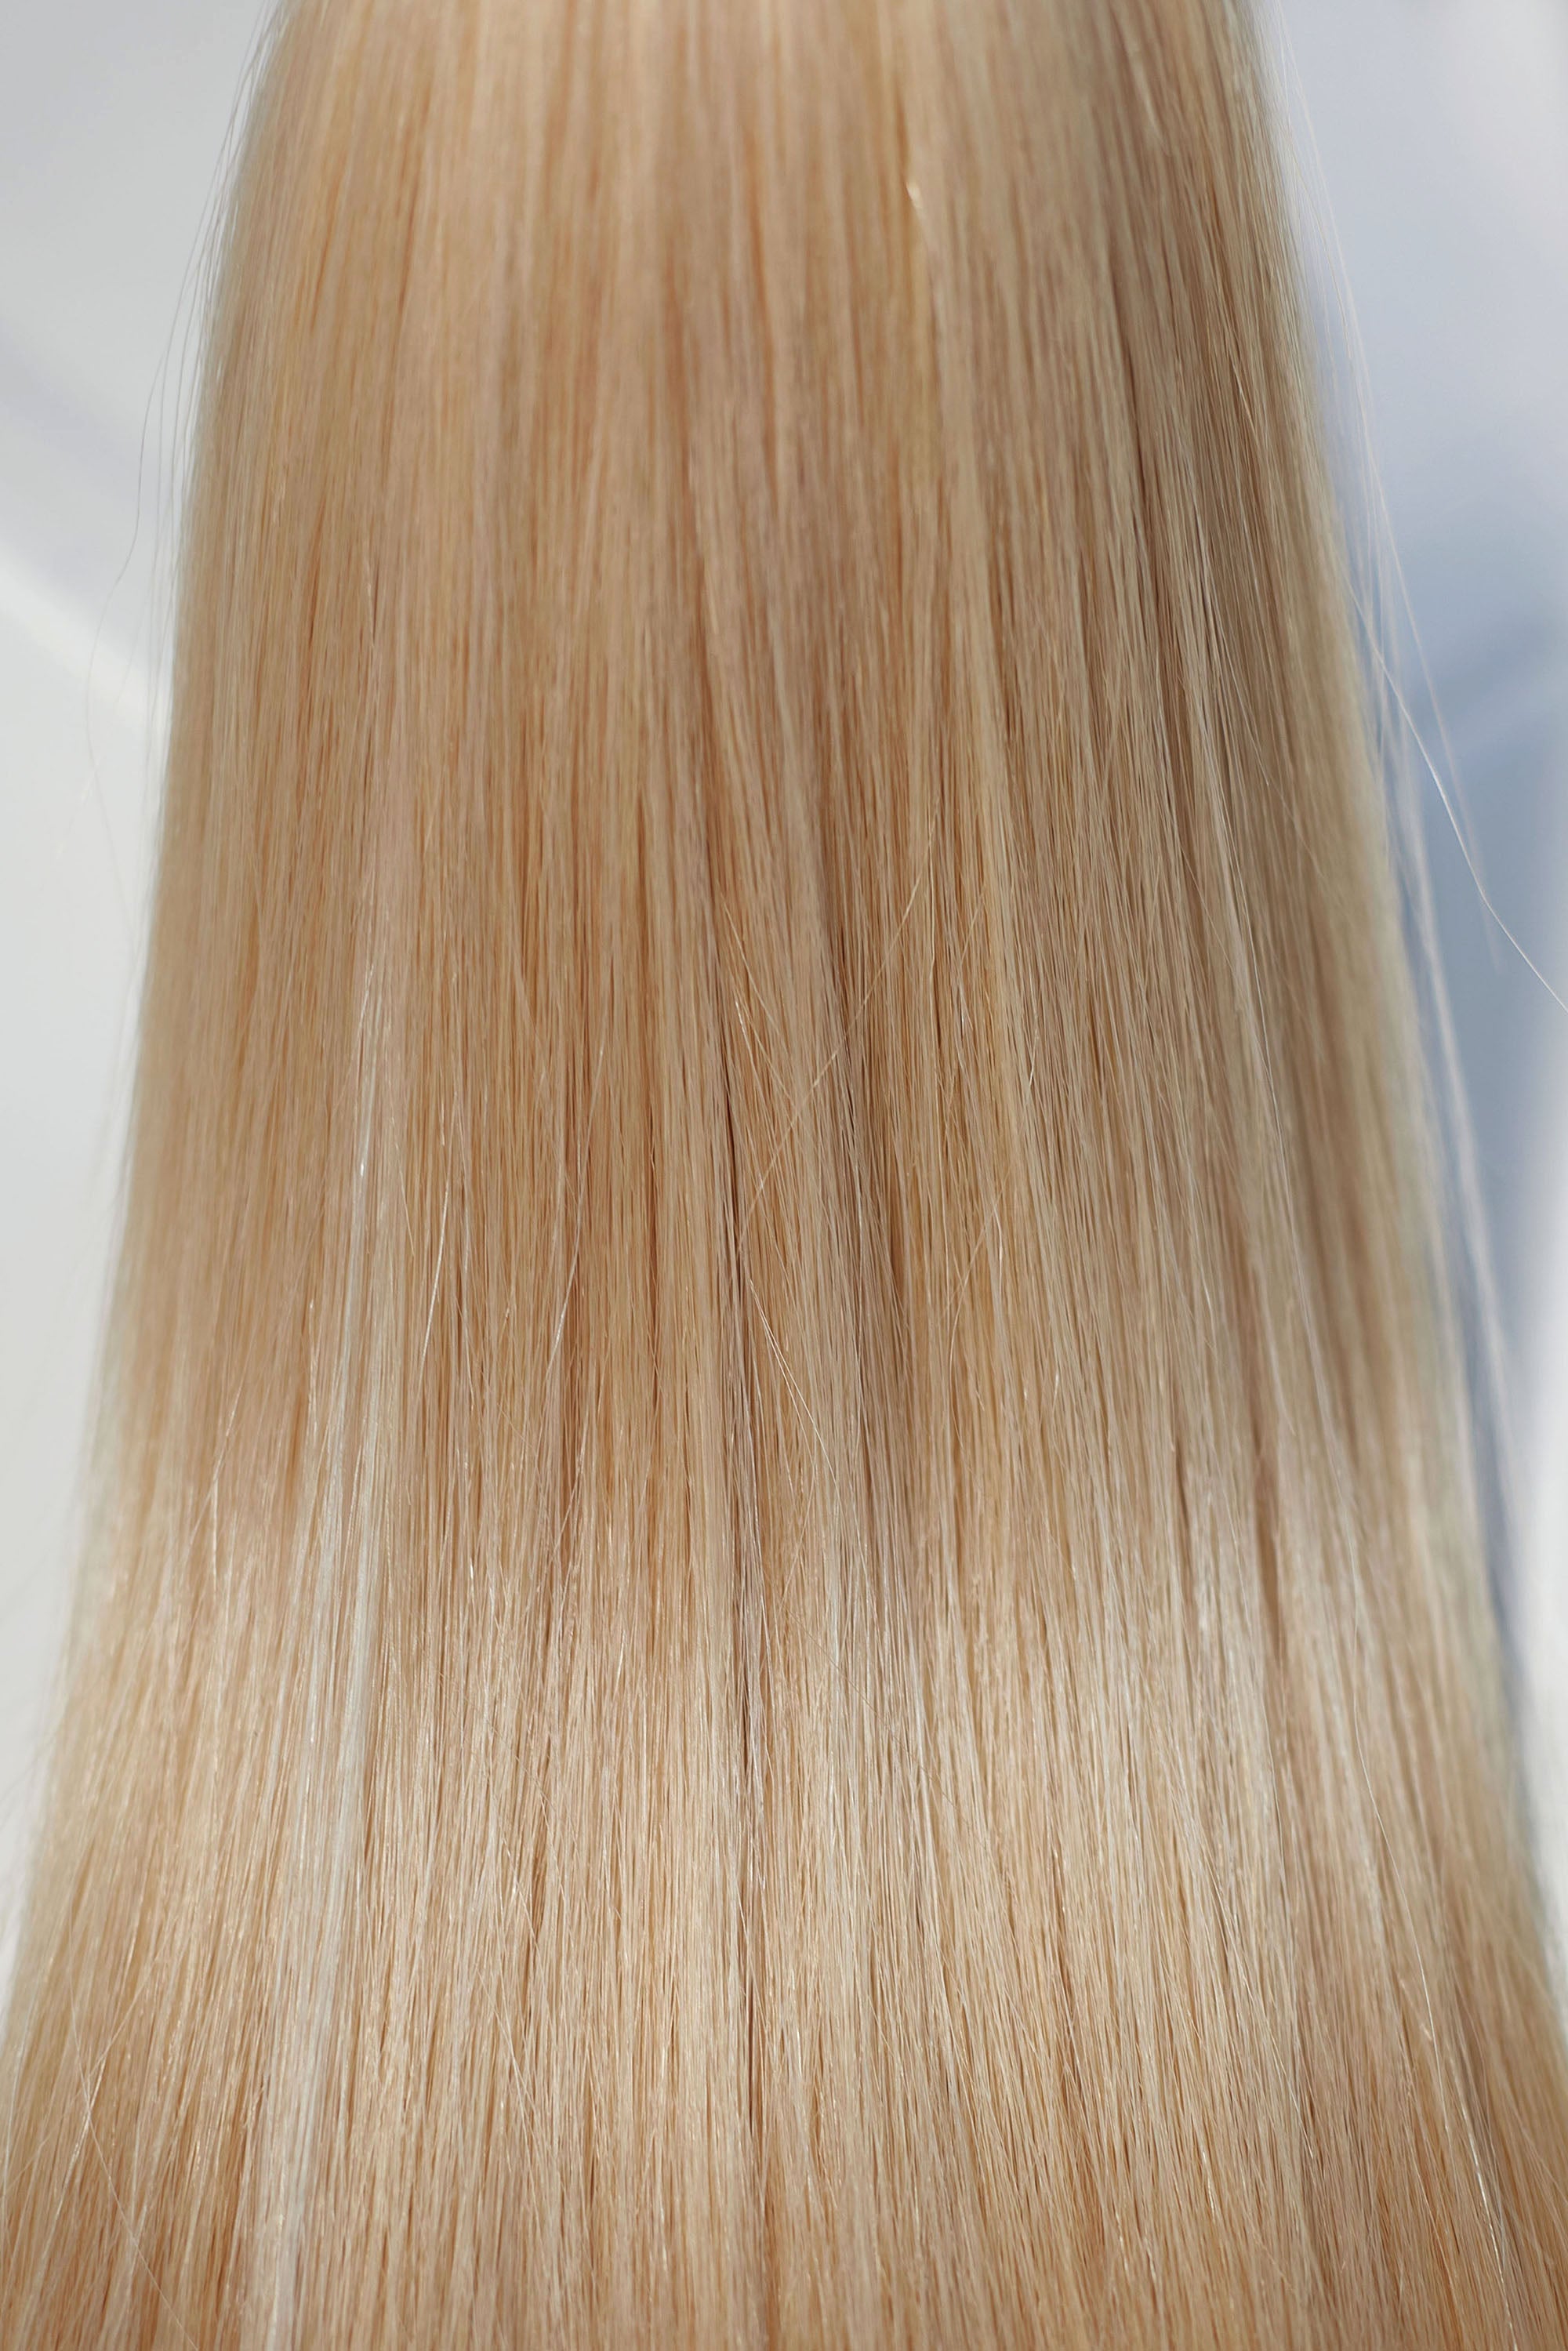 Behair professional Bulk hair "Premium" 24" (60cm) Natural Straight Light Gold Blond #24 - 25g hair extensions